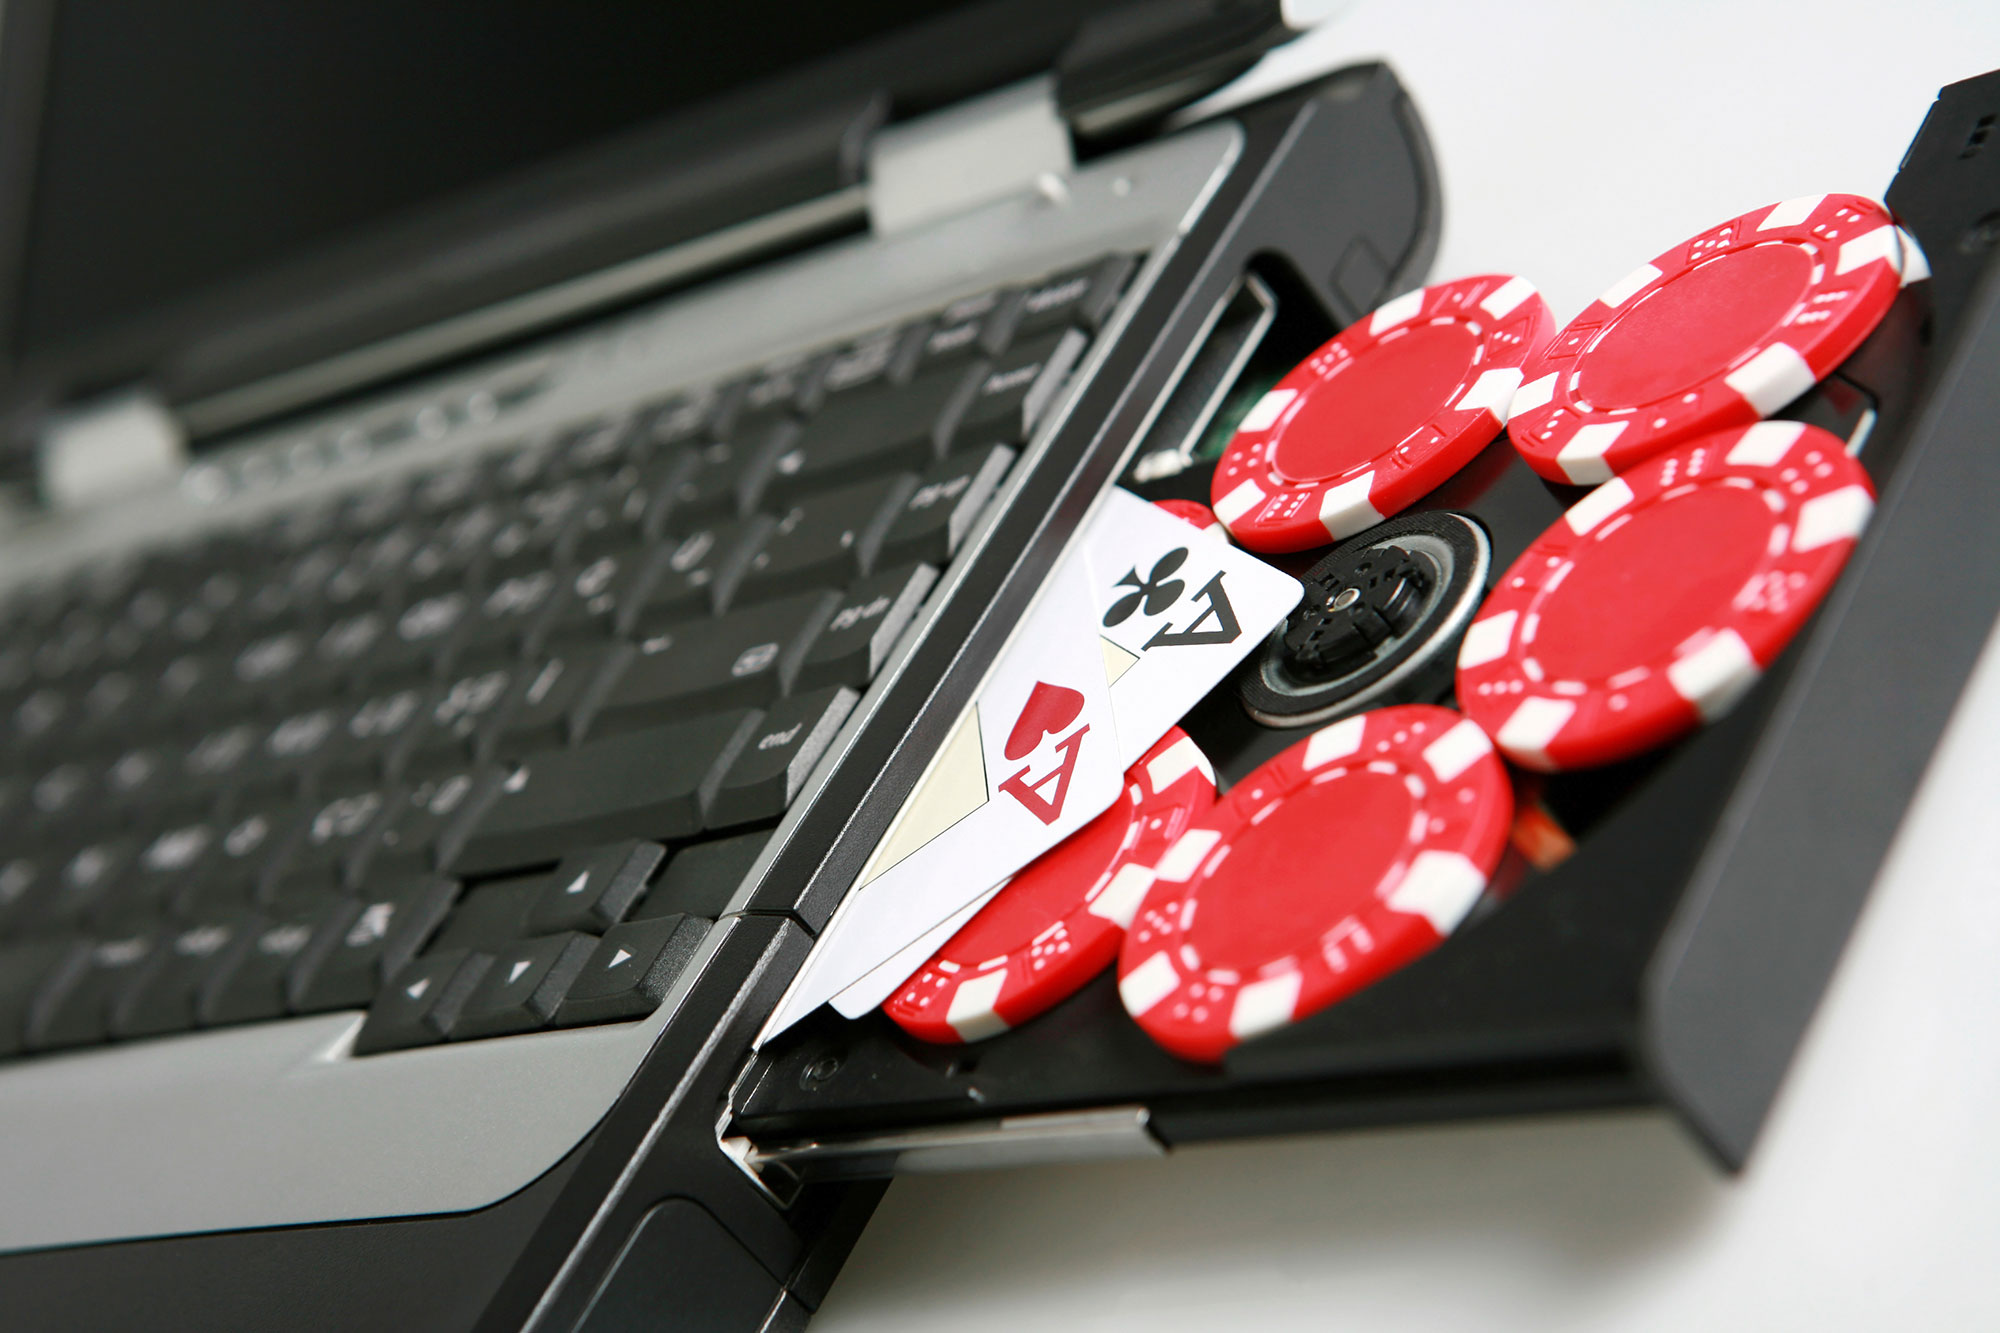 online poker, online gambling gambler casino